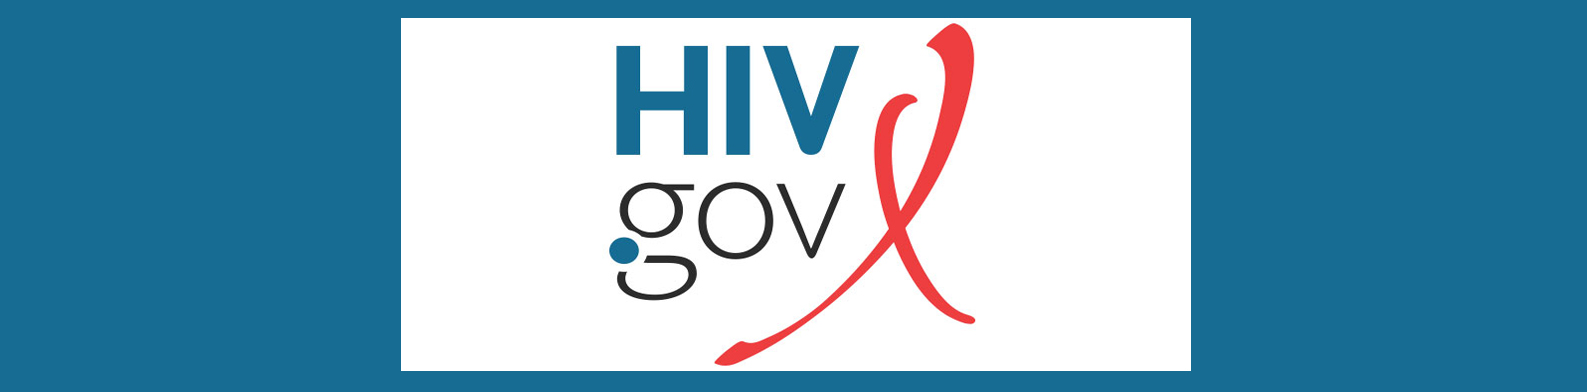 CDC Publishes New HIV Surveillance Reports